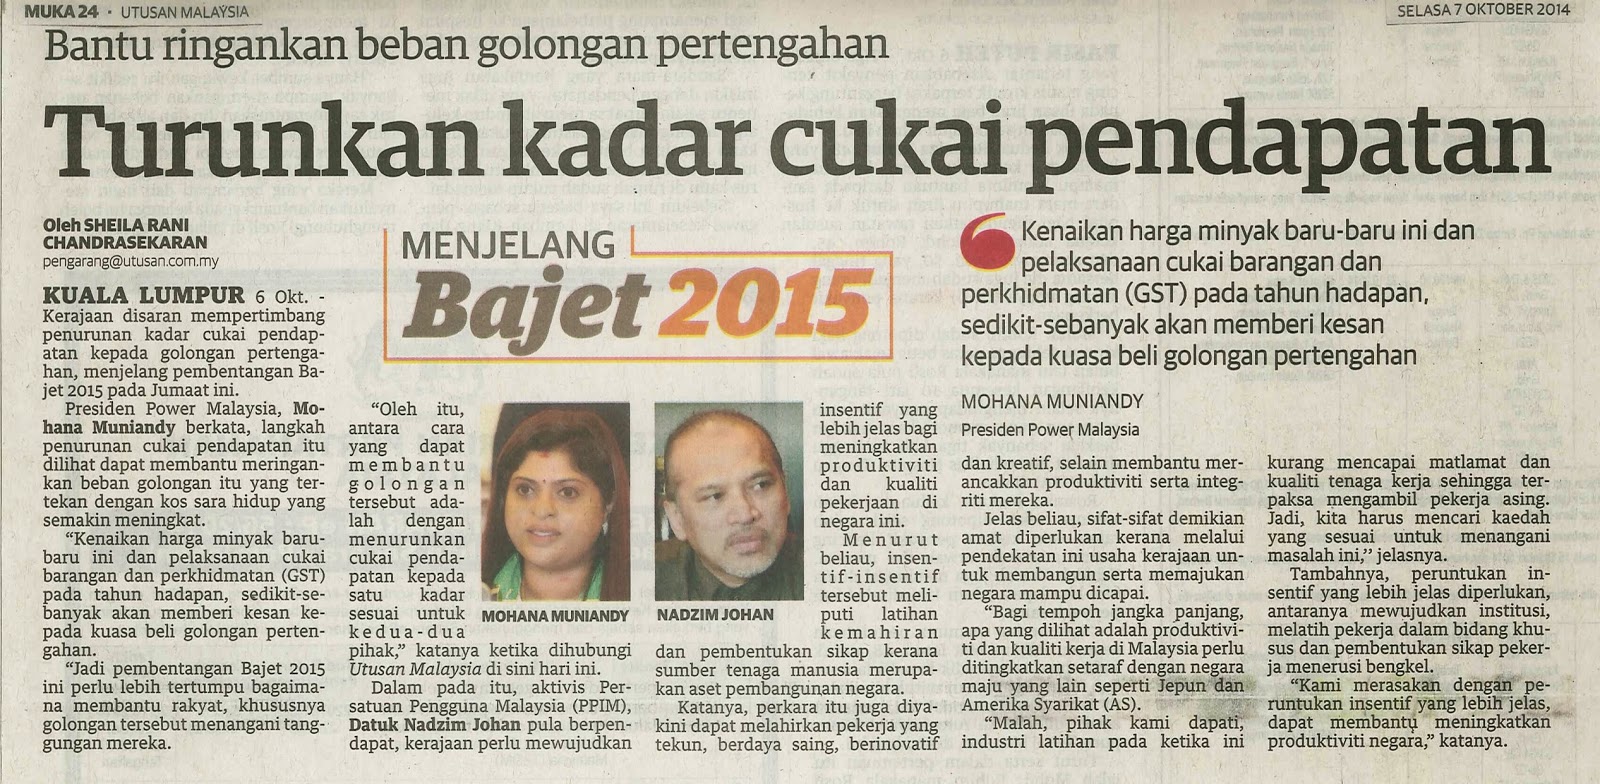 2143 Arkib Berita Ppim 7 10 2014 Utusan Malaysia Turunkan Kadar Cukai Pendapatan Ppim